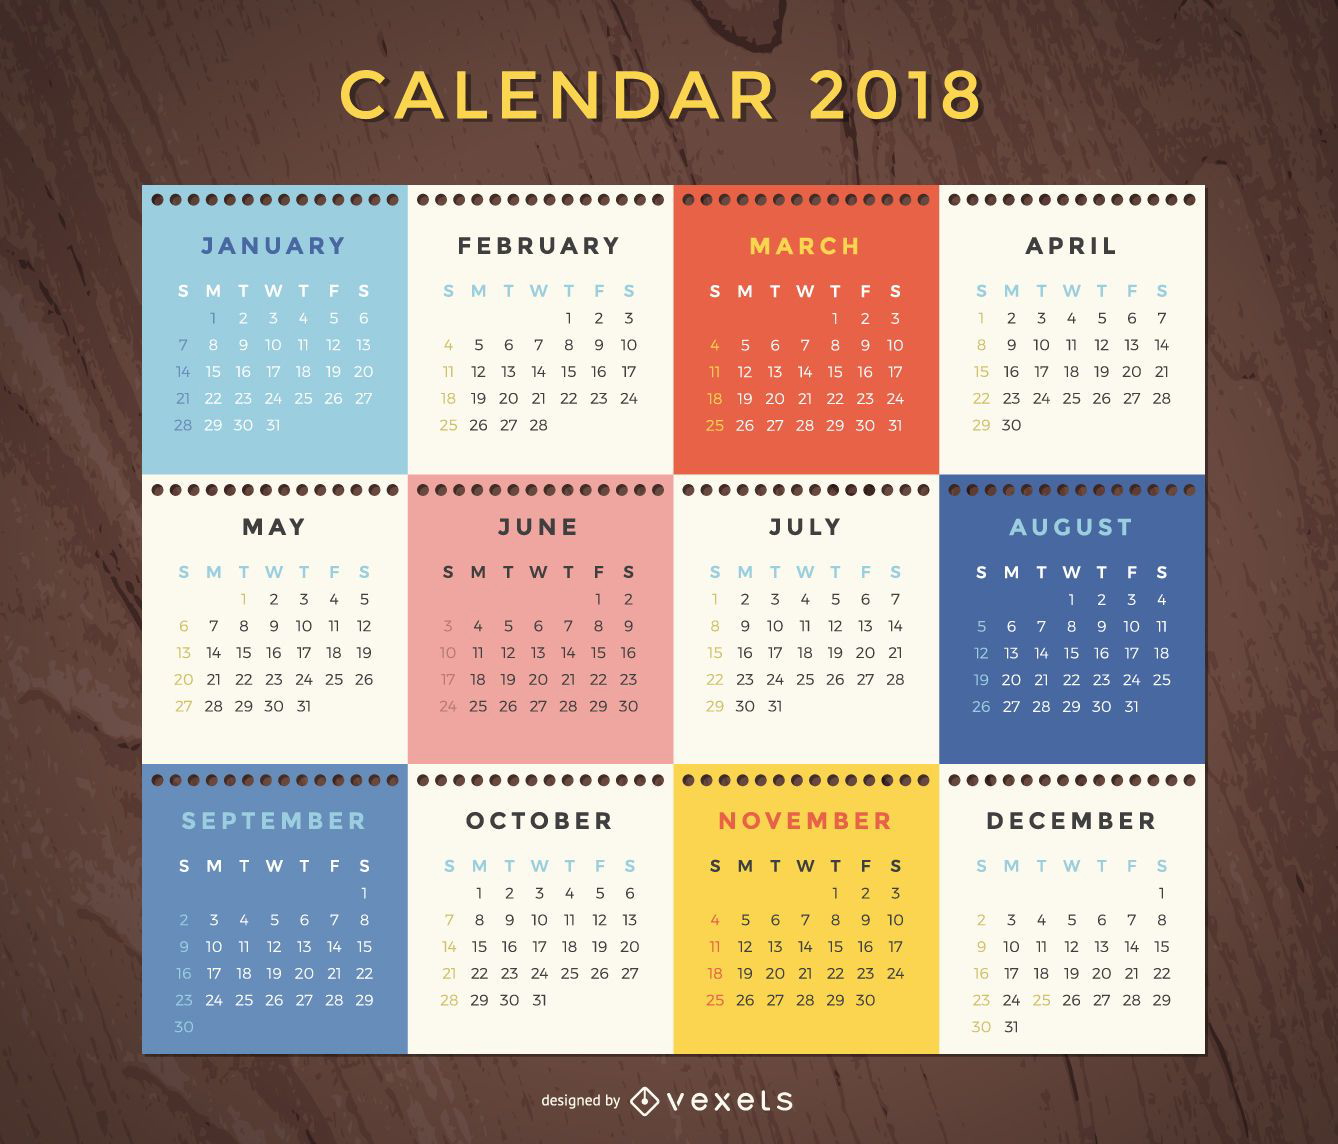 Calendario mensual 2018